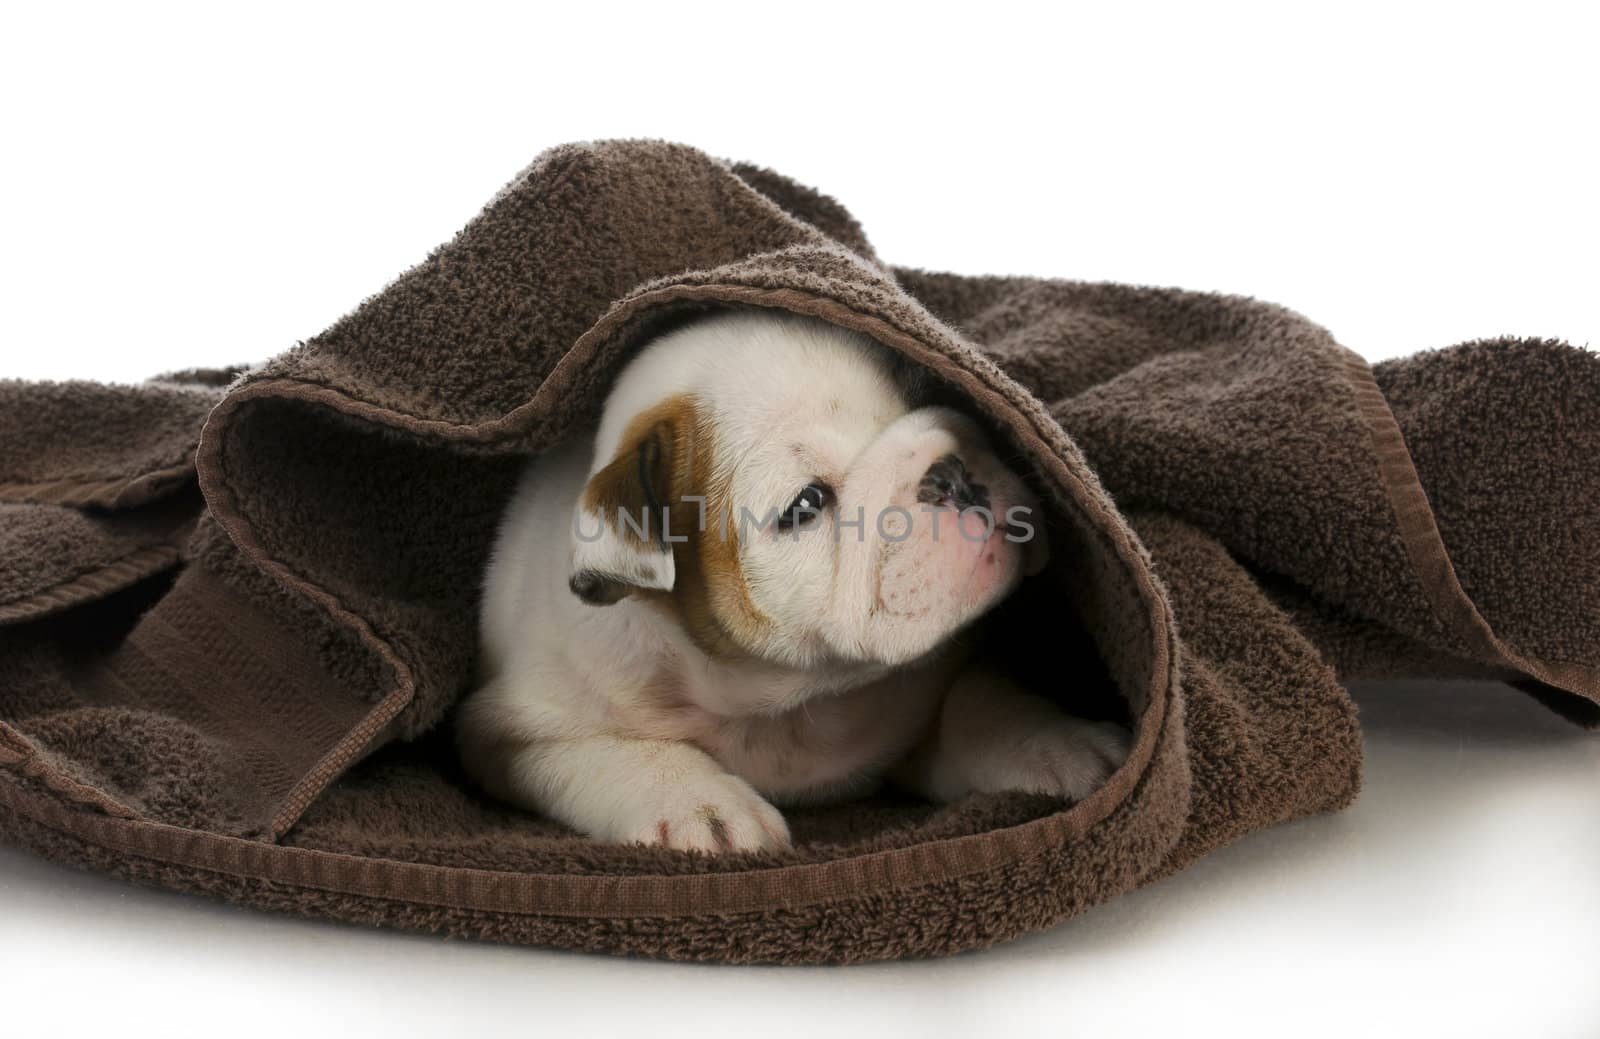 puppy bath time - english bulldog puppy and towel 